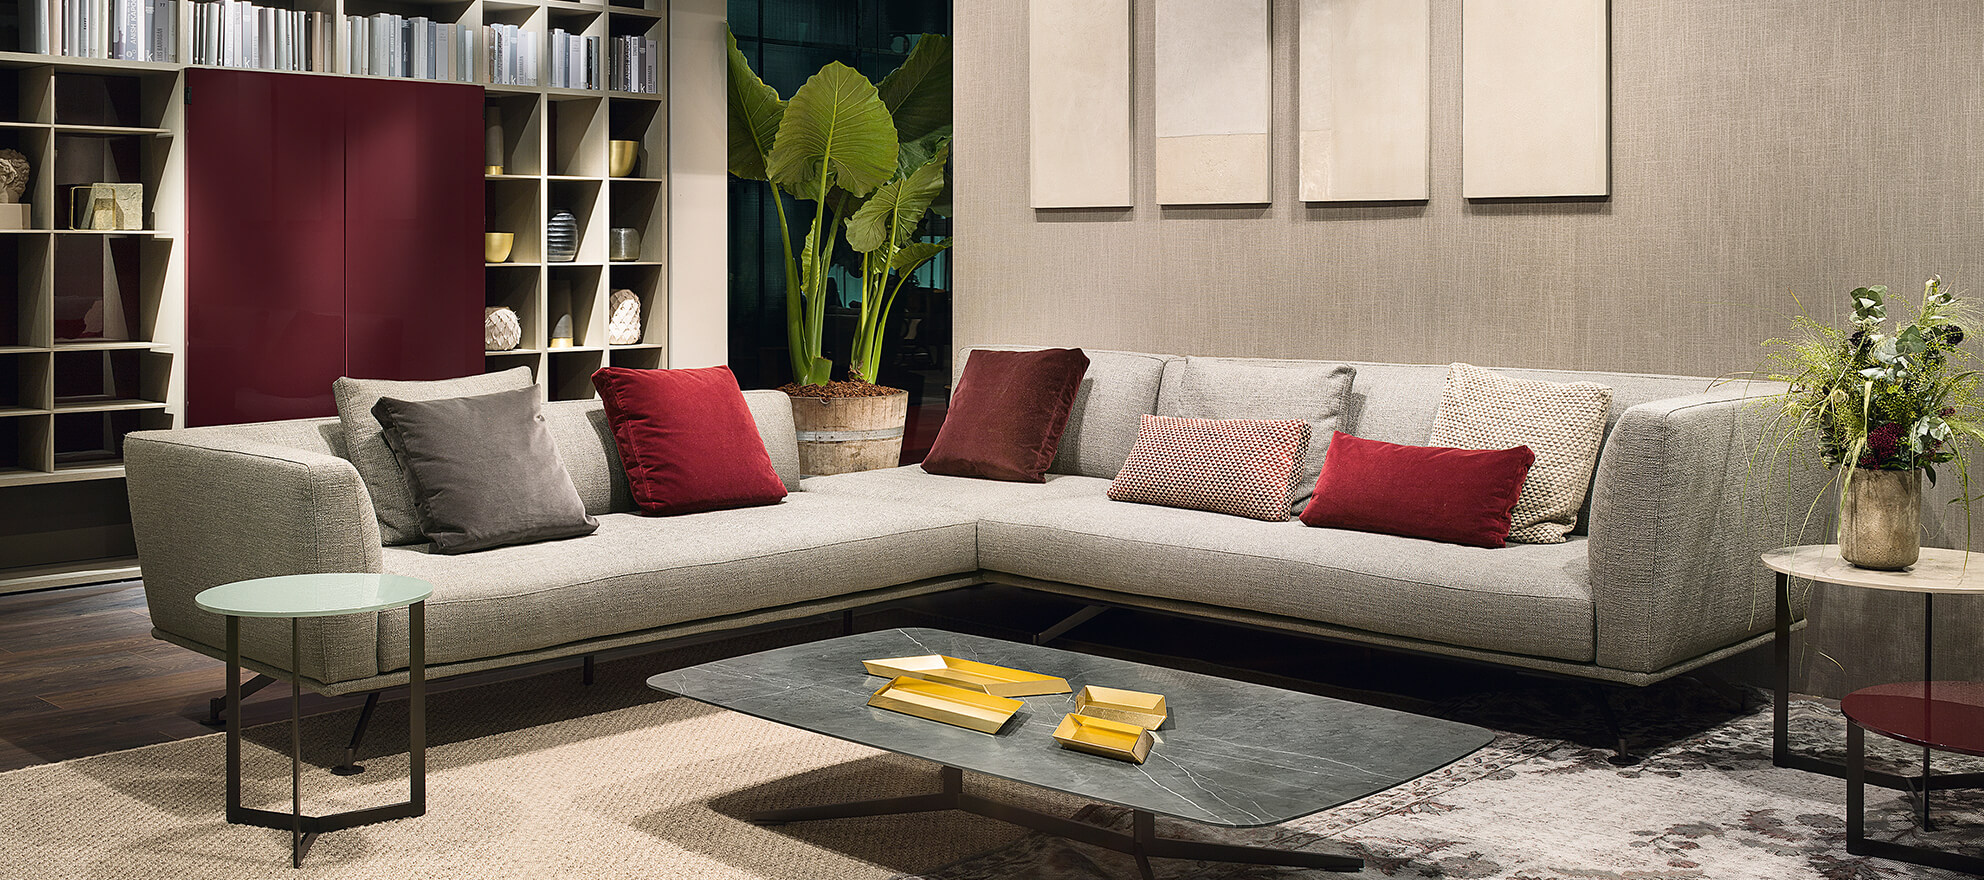 Innovative Furniture Designs For Contemporary Living